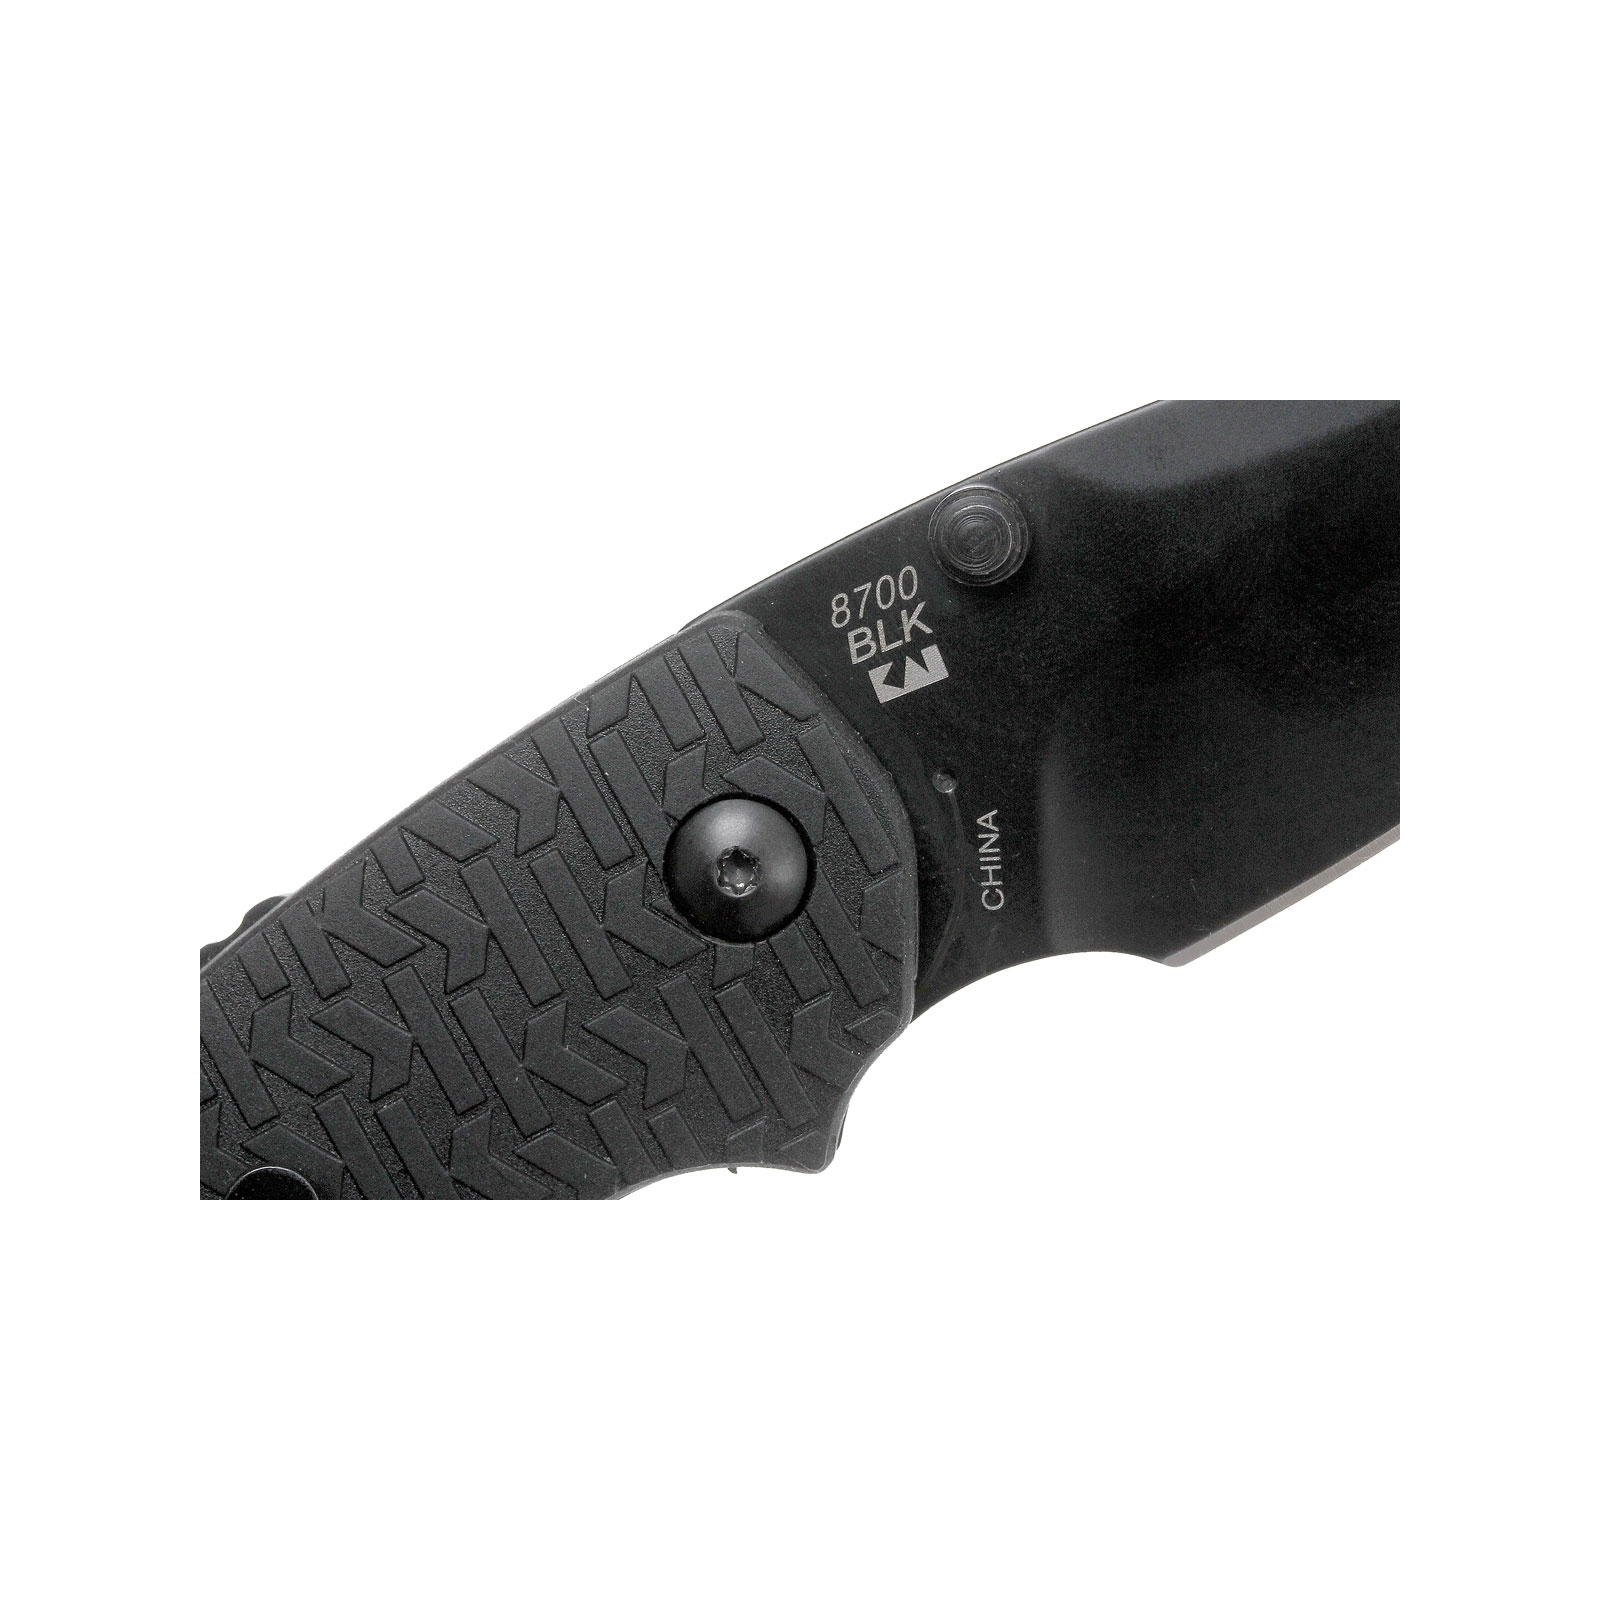 Нож Kershaw Shuffle lime (8700LIMEBW) изображение 4